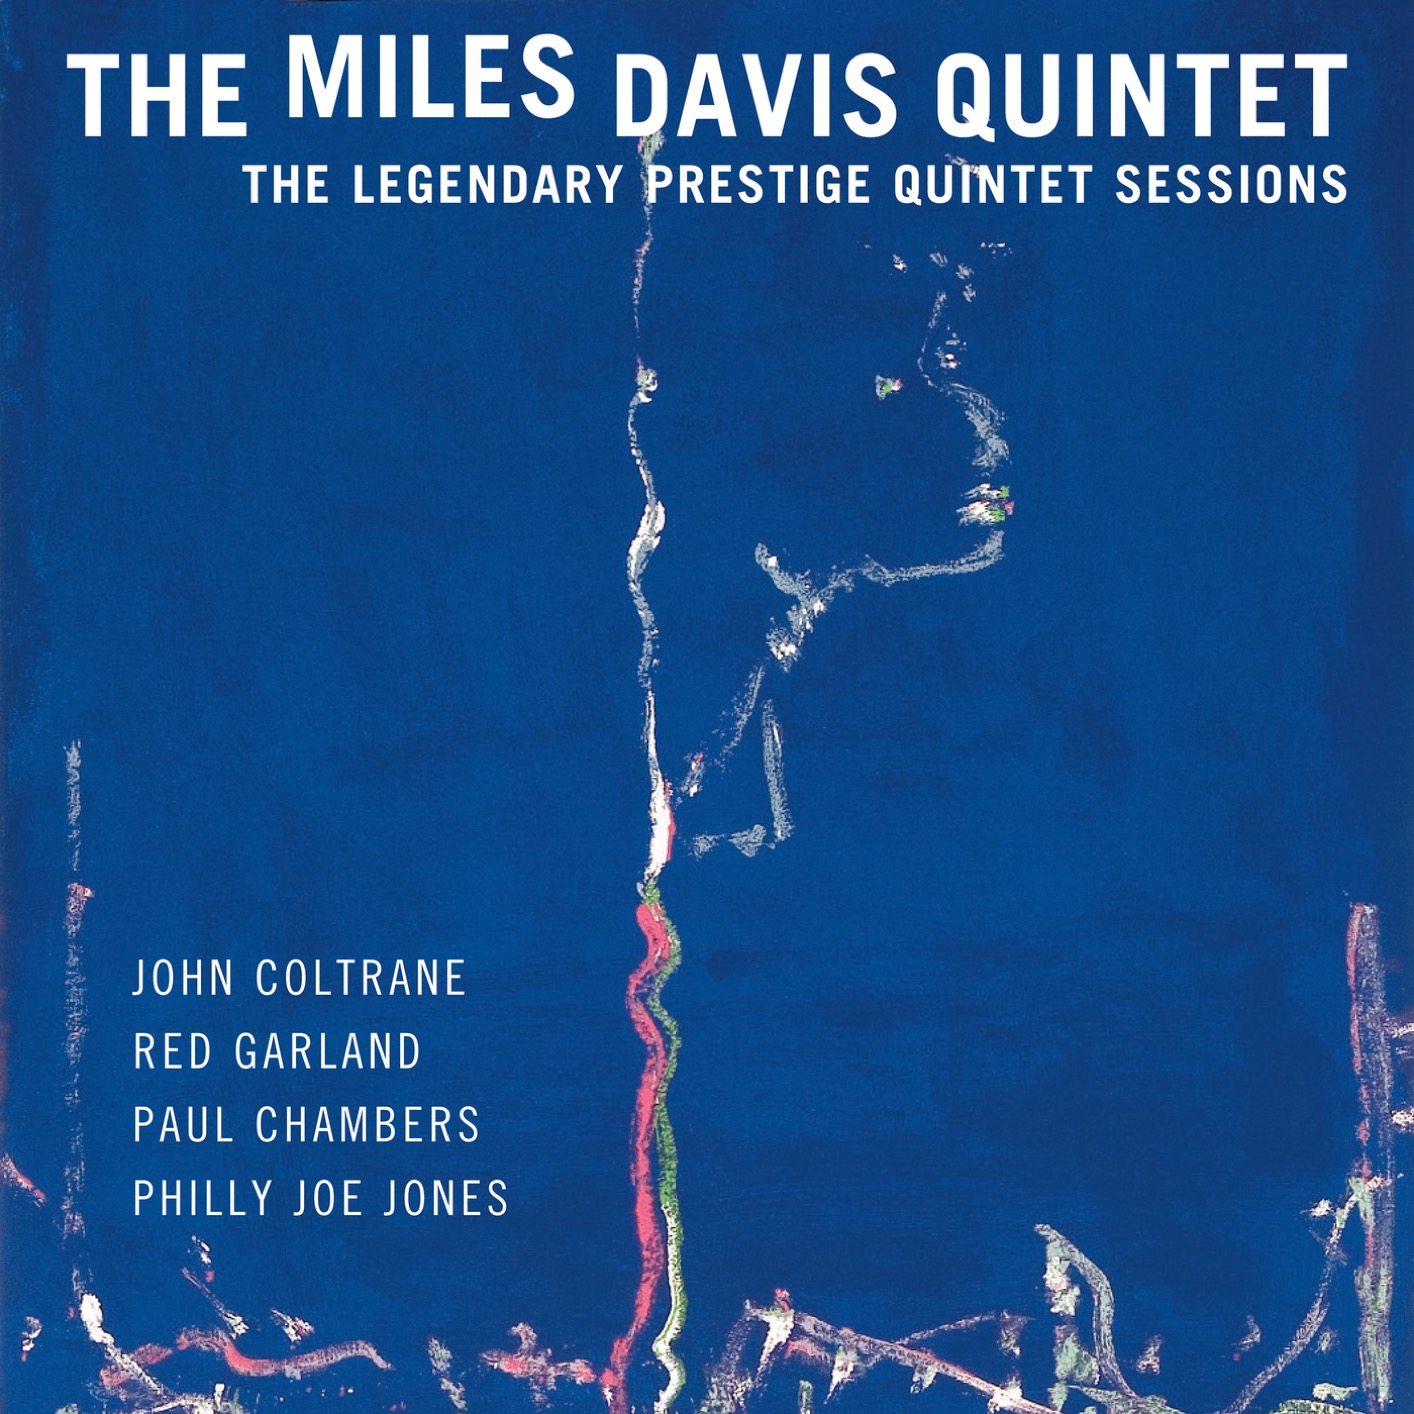 The Miles Davis Quintet - The Legendary Prestige Quintet Sessions (Mono Remastered) (2019) [FLAC 24bit/192kHz]